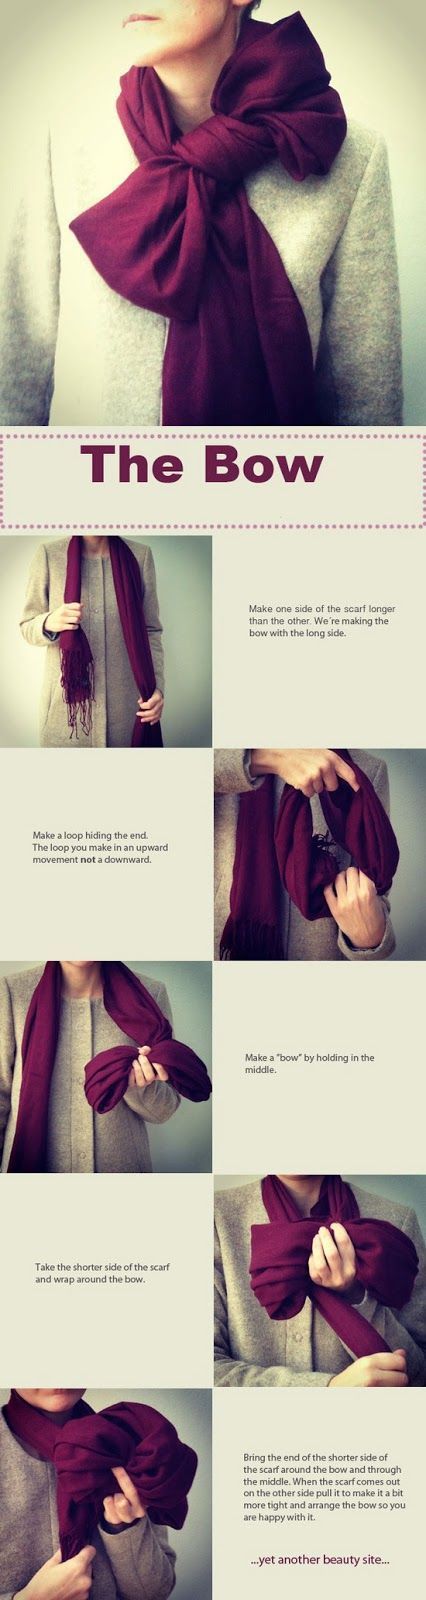 bufanda de moño